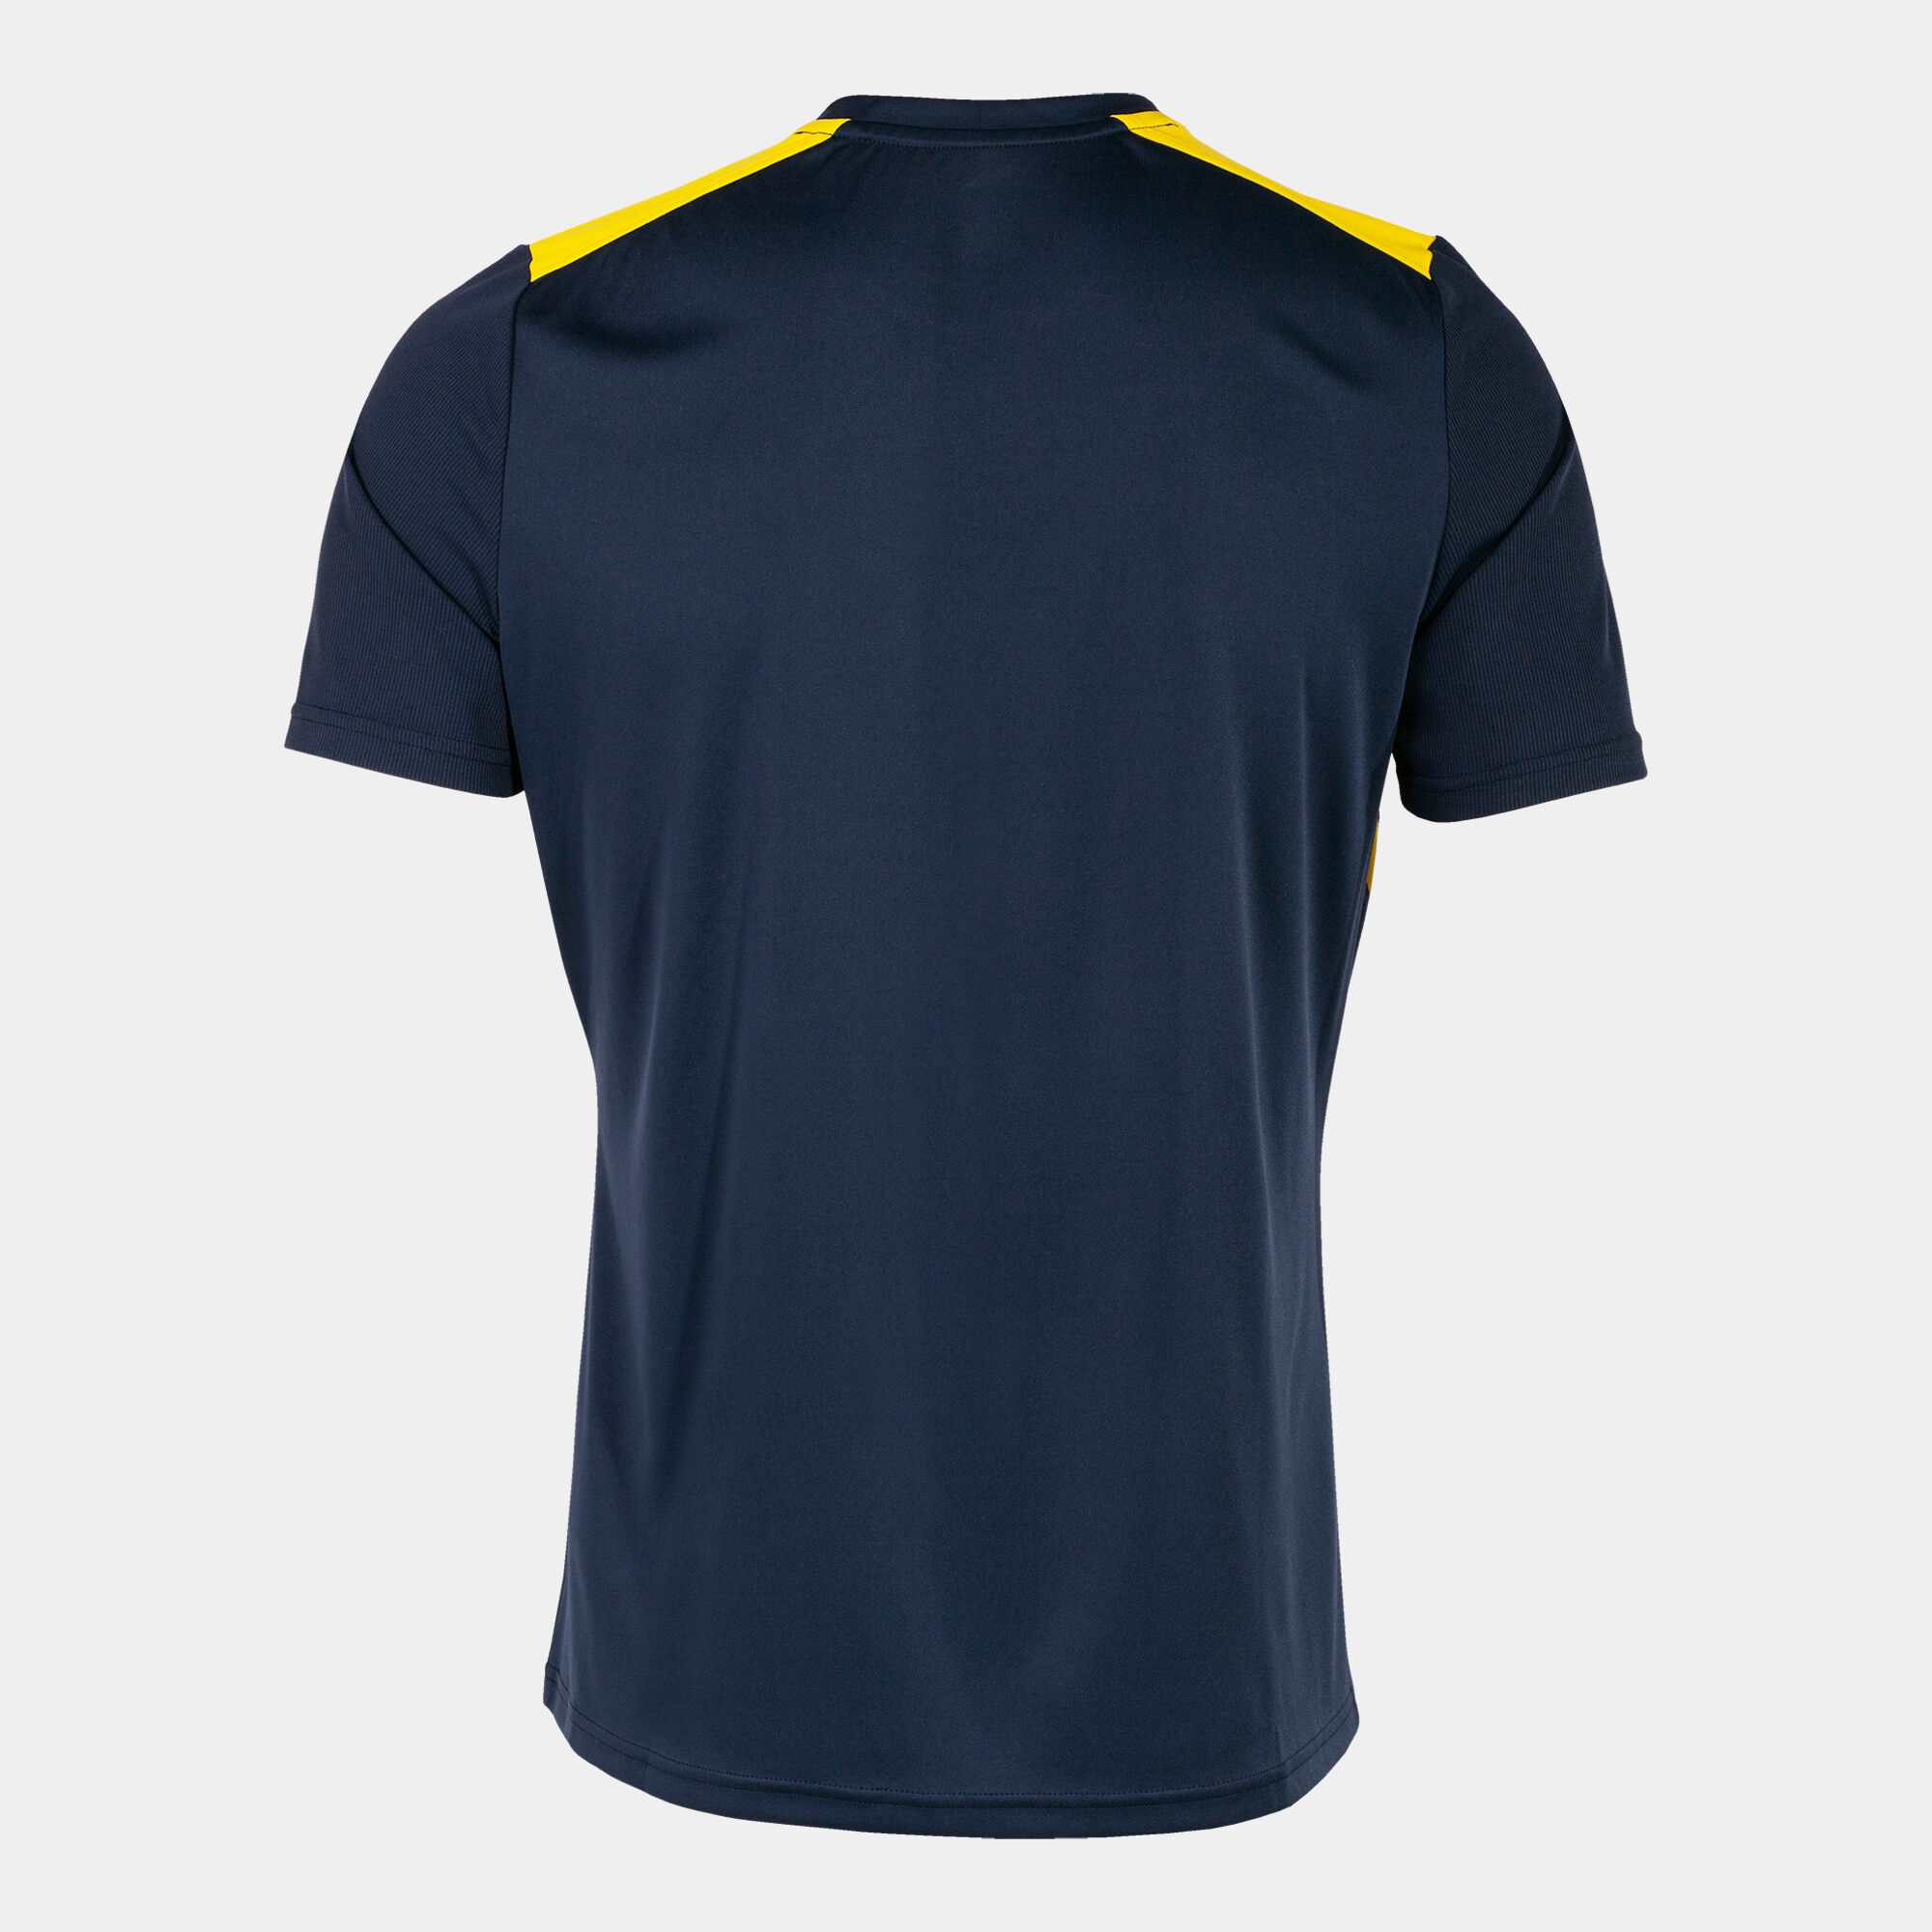 Camiseta manga corta hombre Championship VII marino amarillo